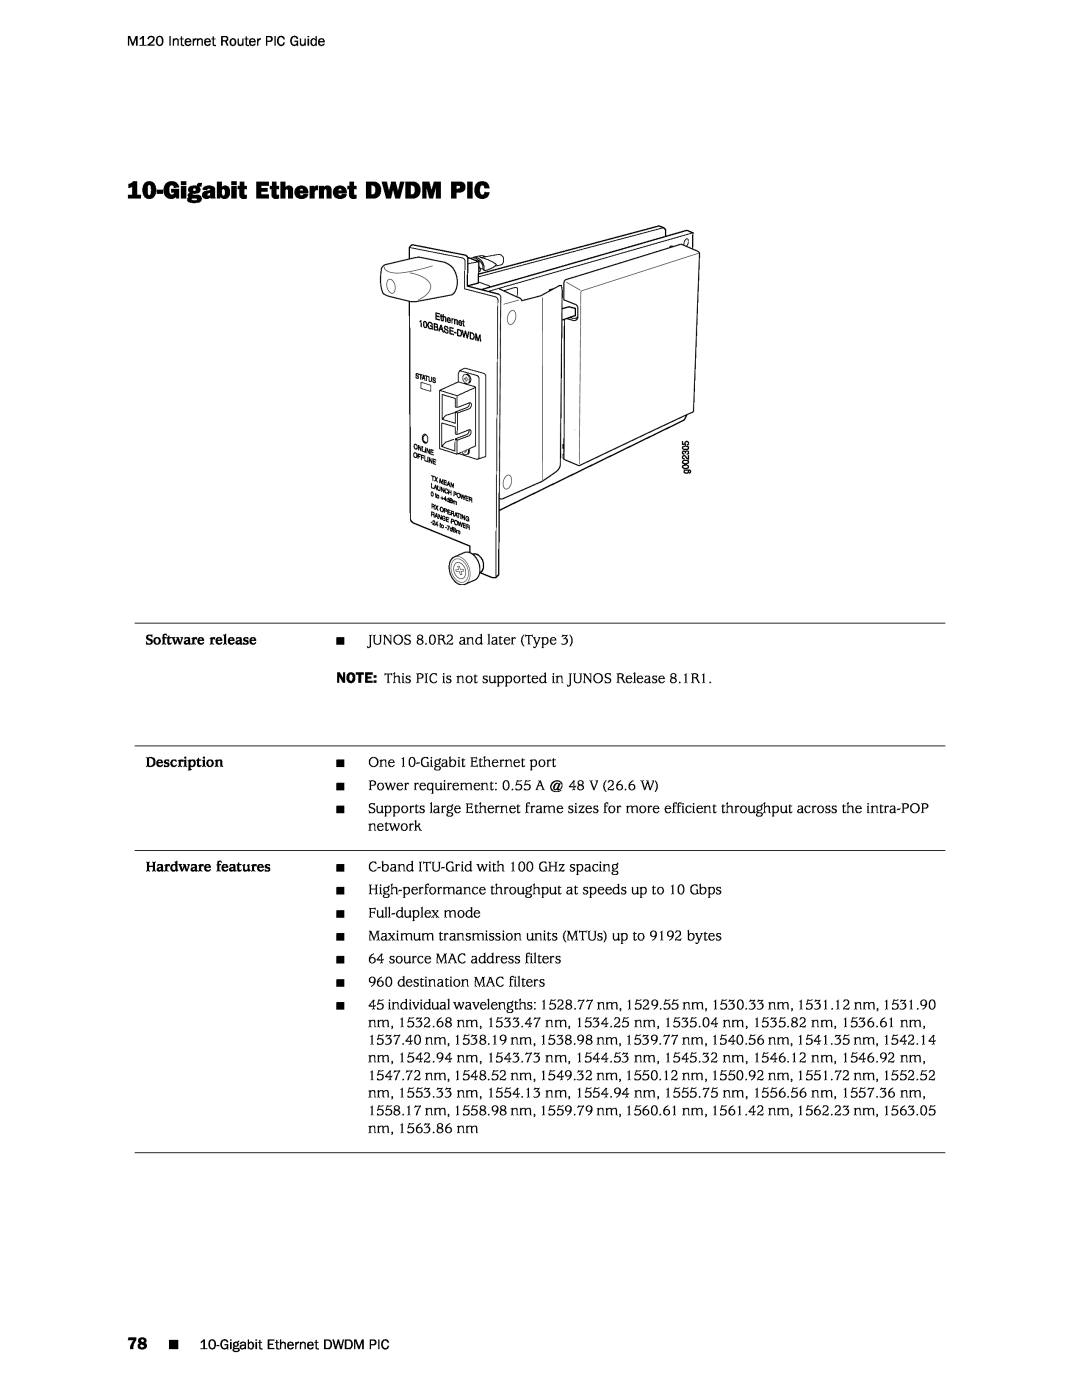 Juniper Networks M120 manual Gigabit Ethernet DWDM PIC, Software release, Description, Hardware features 